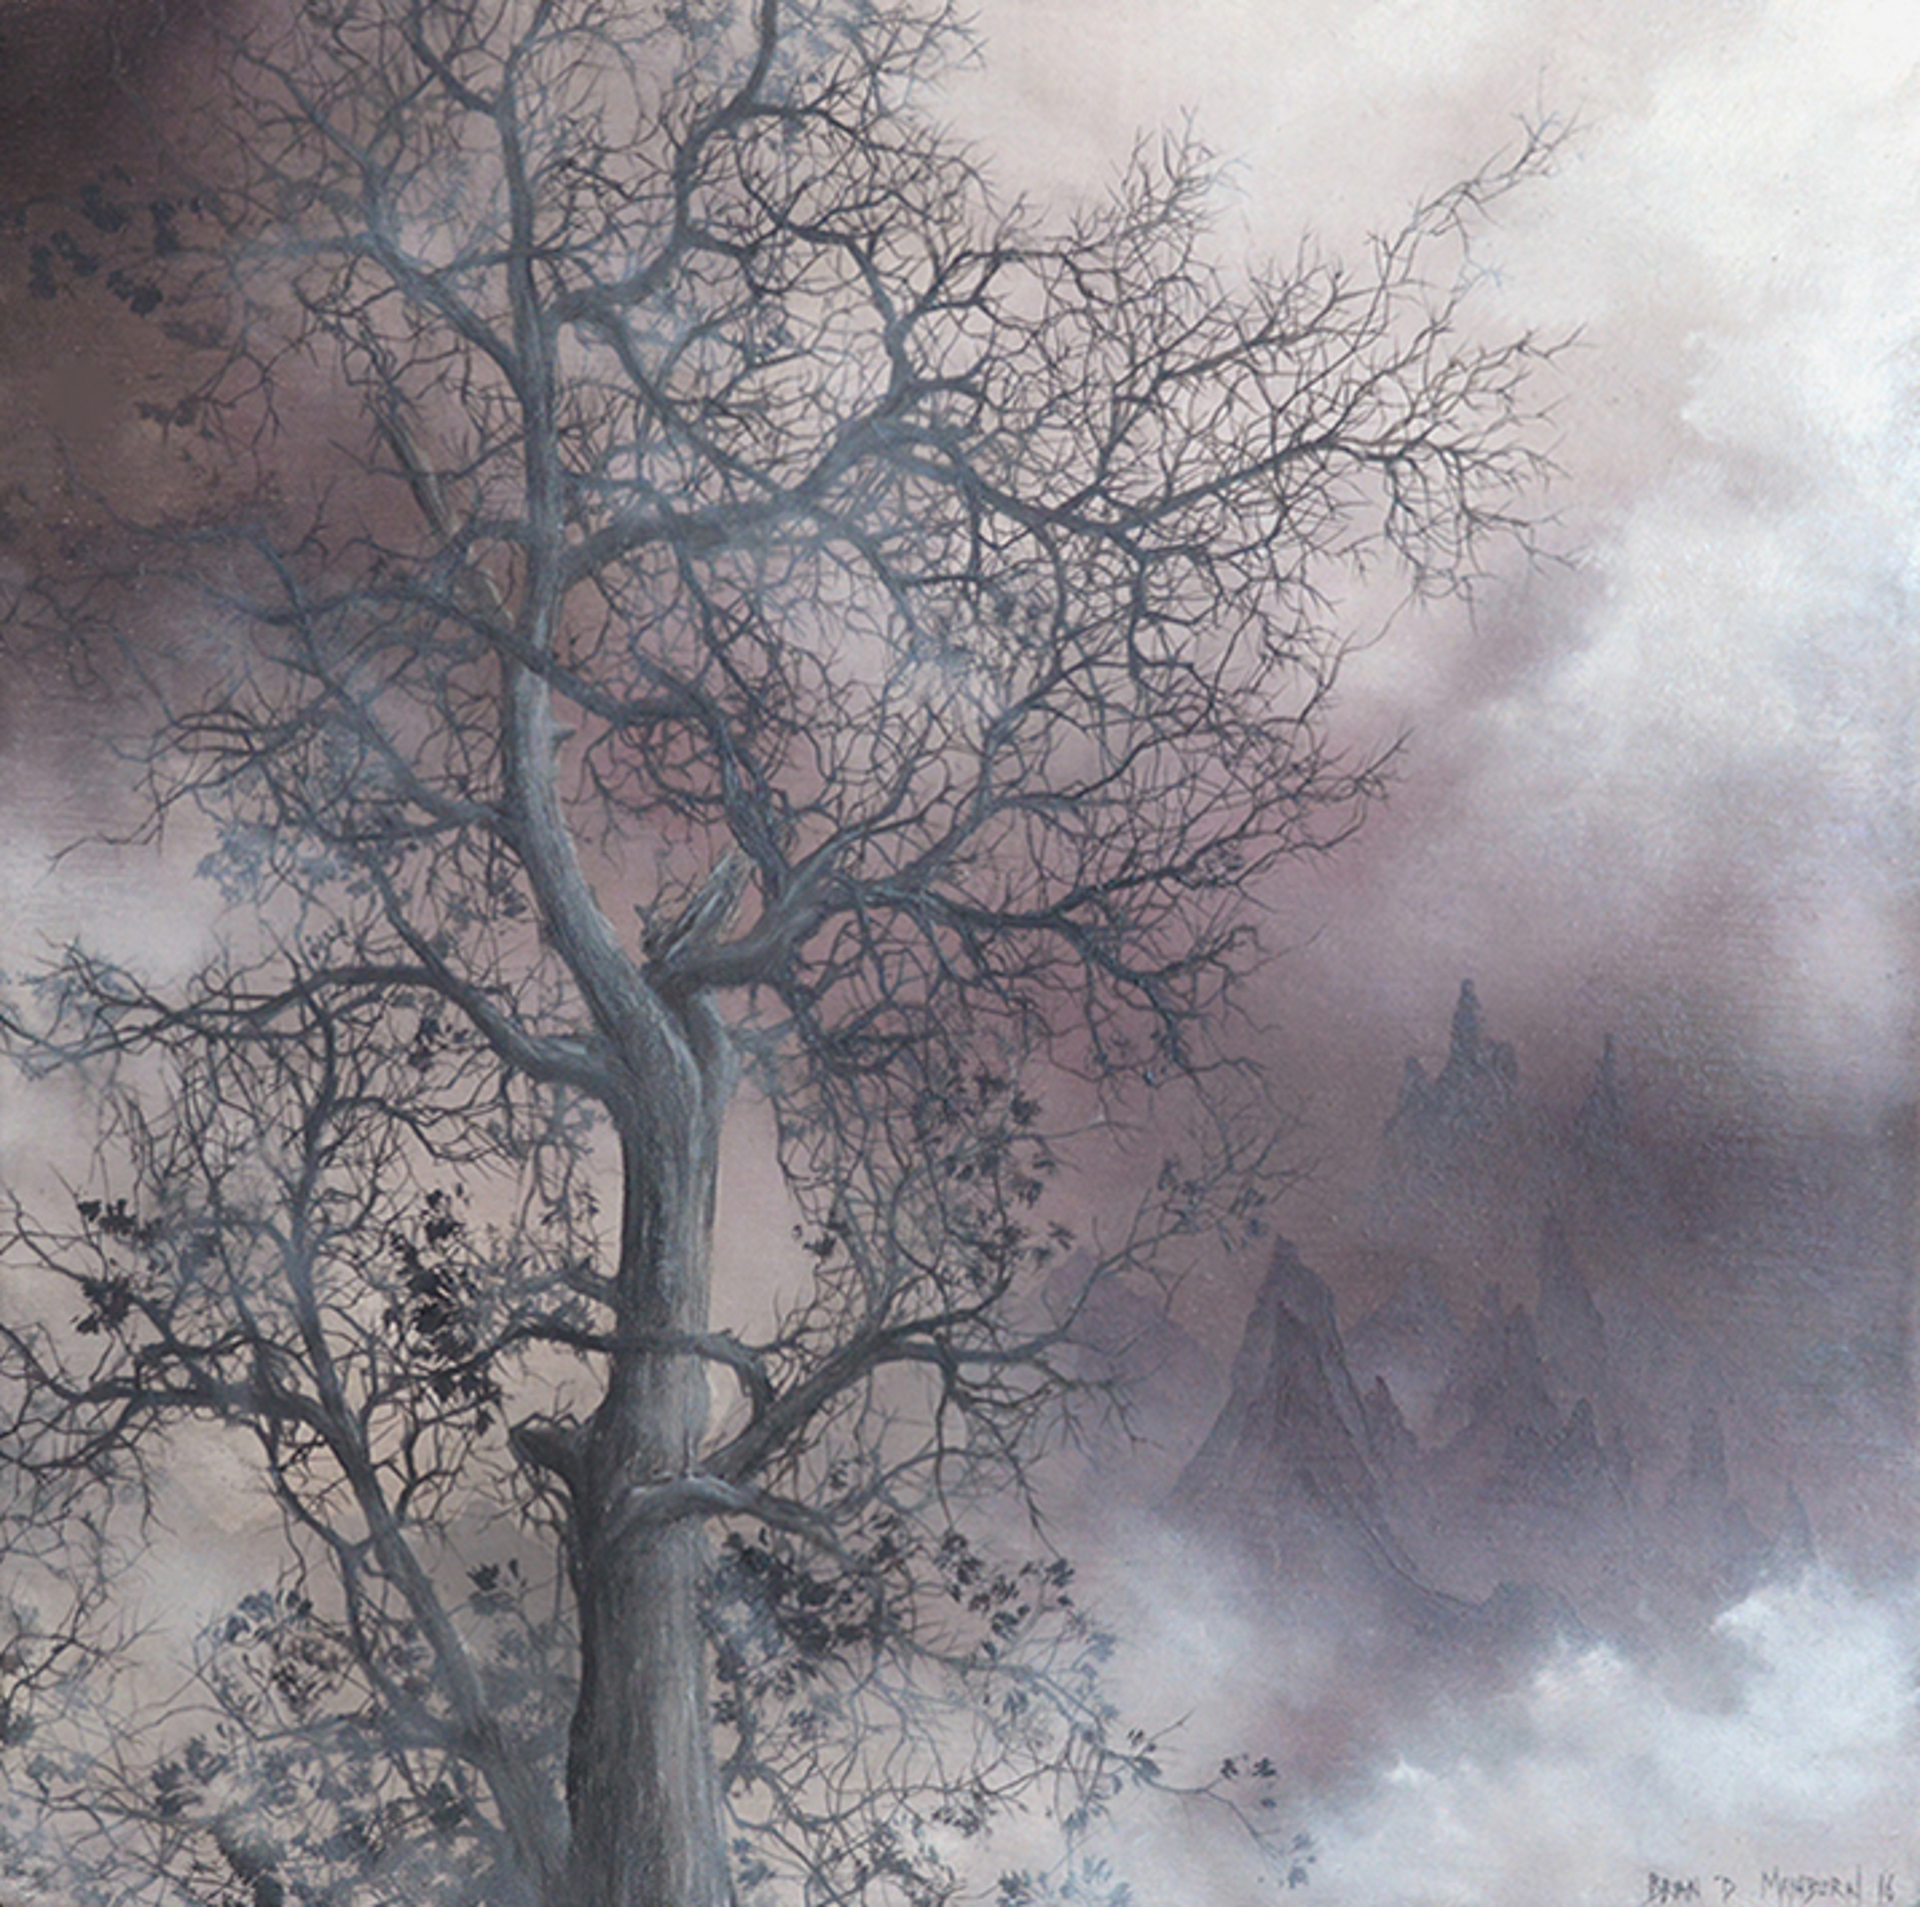 Mist Shrouded Tree by Brian Mashburn